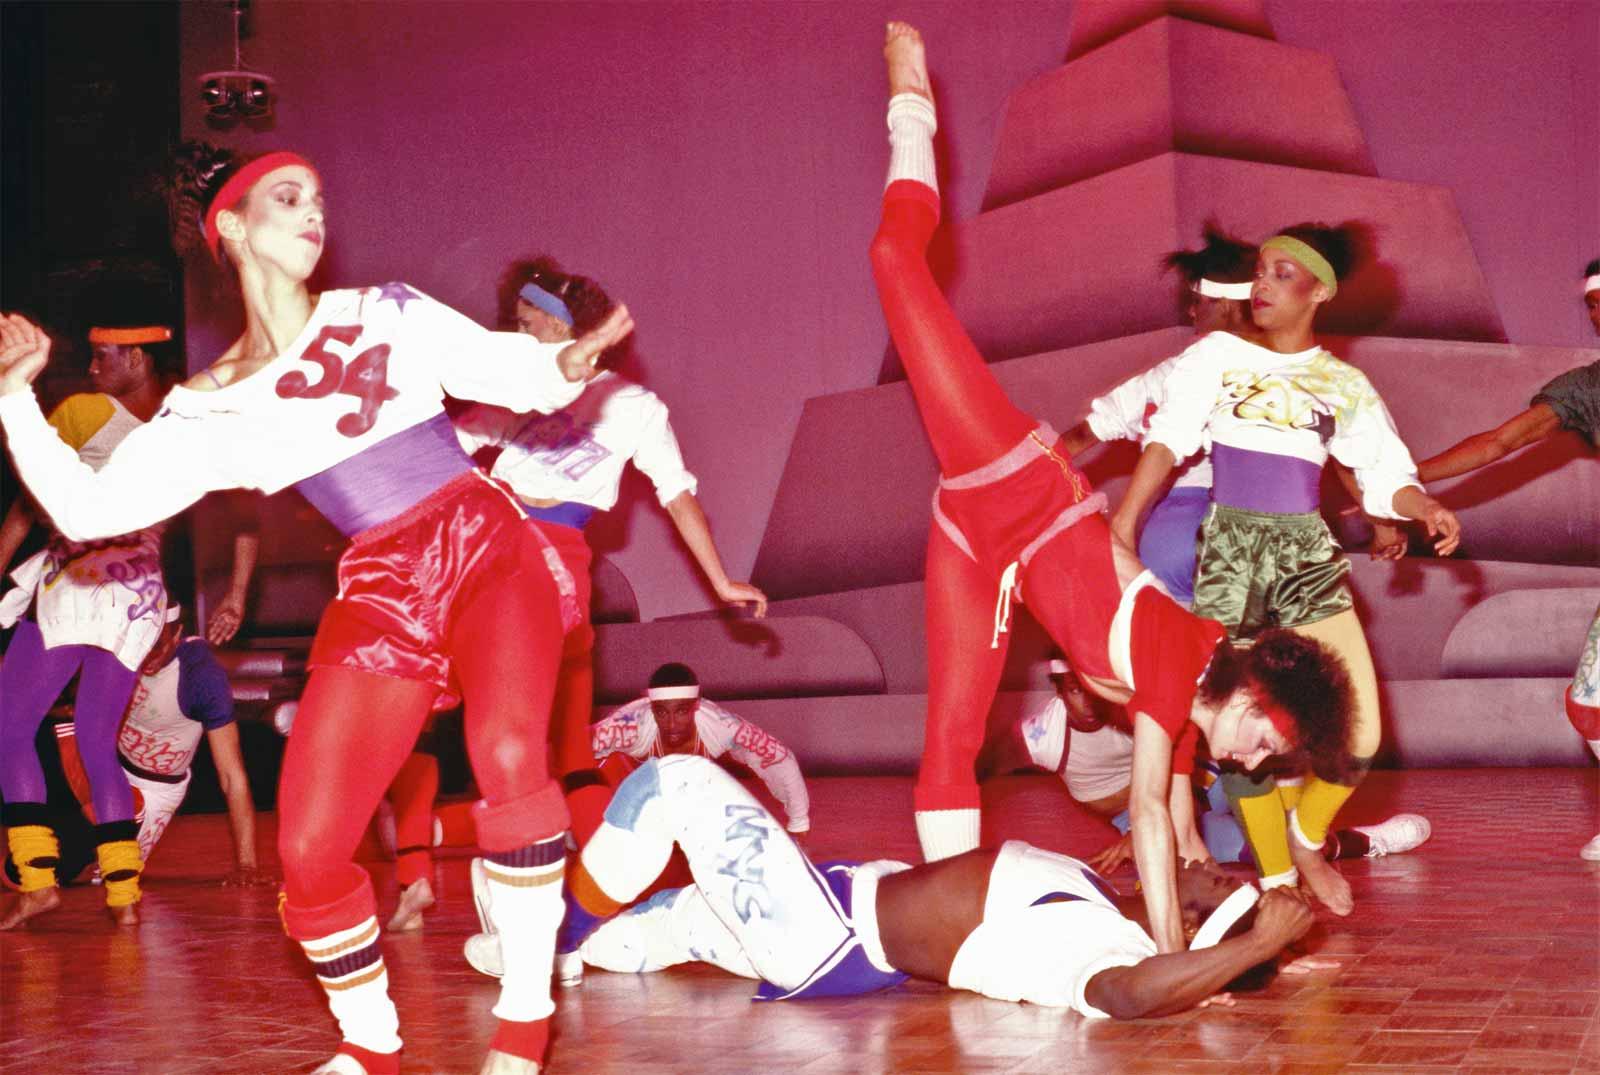 Fiorucci Dancers, April 26, 1977.